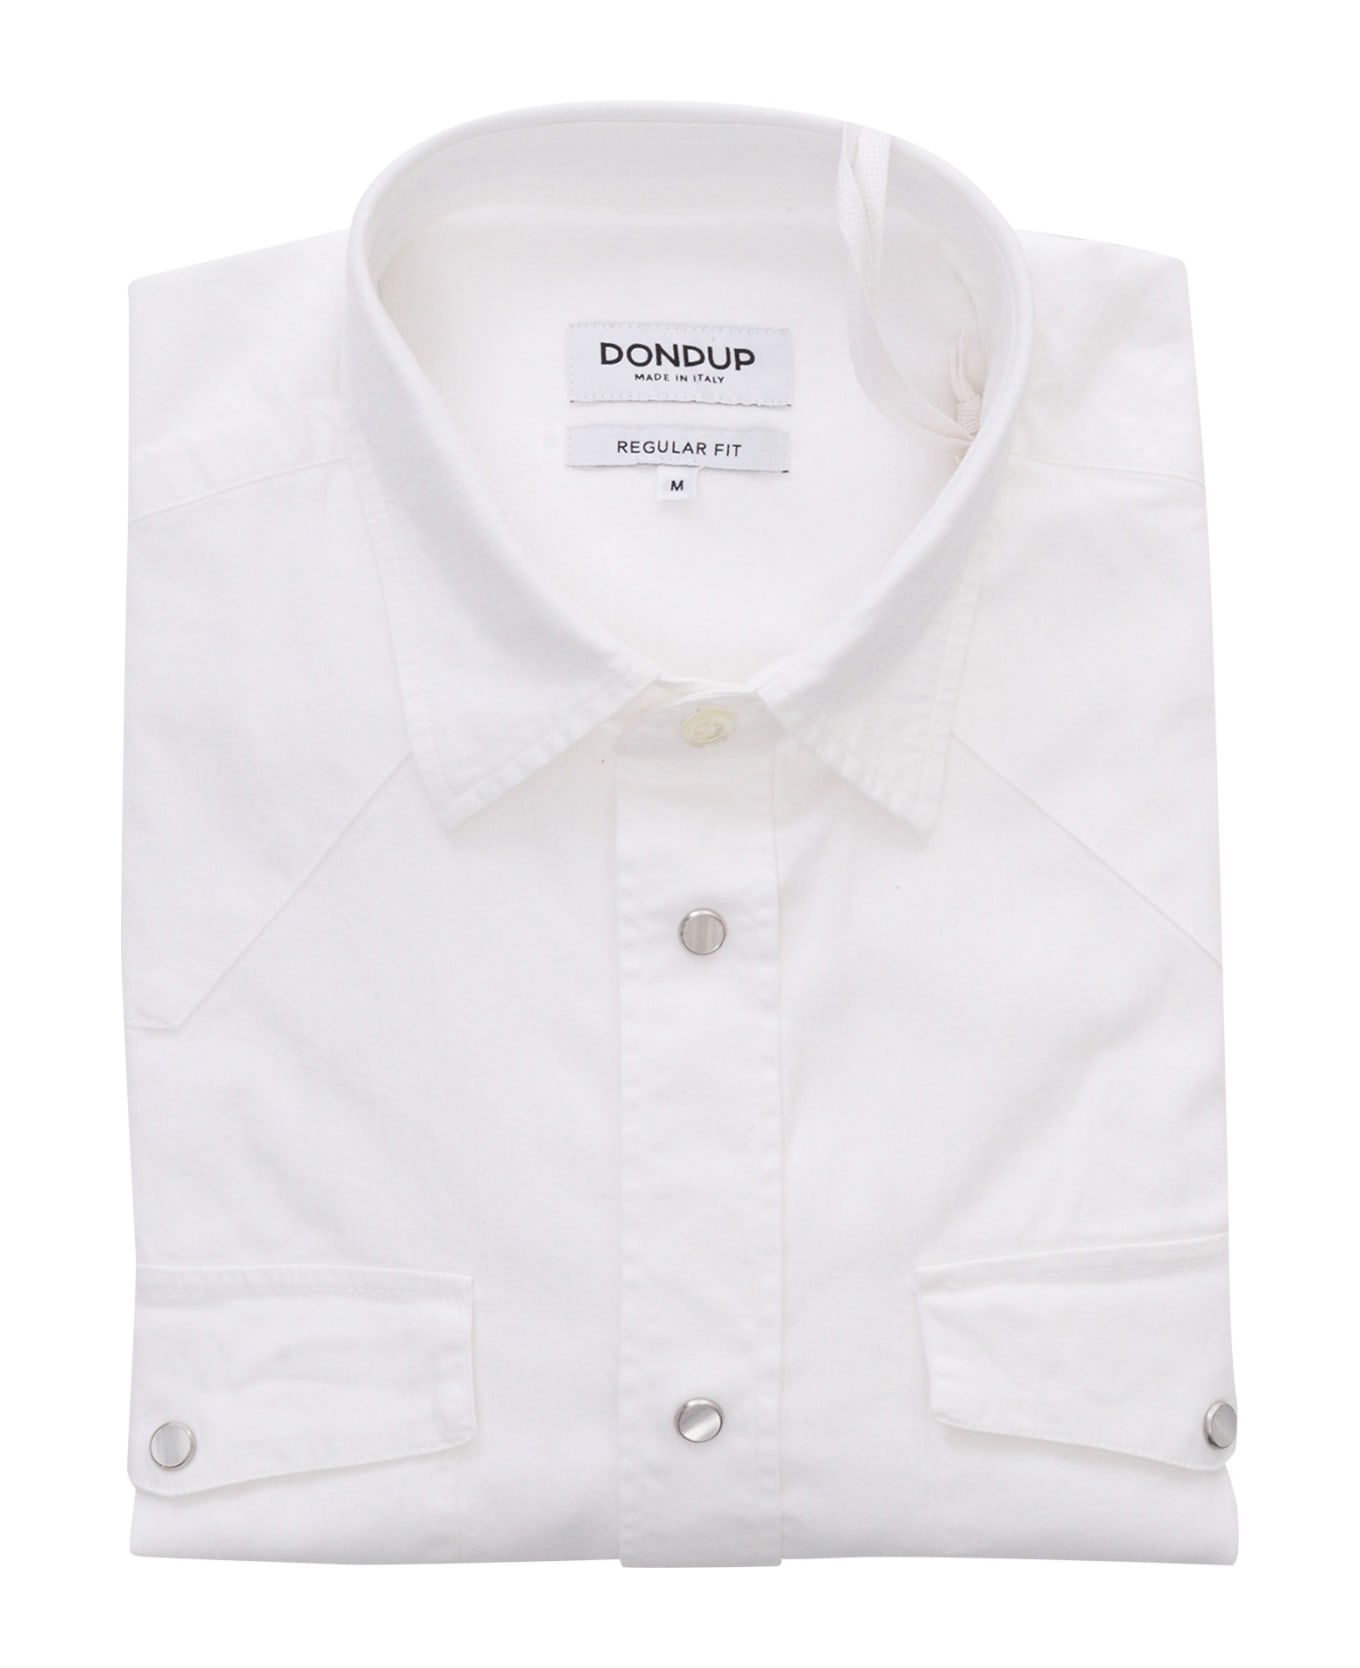 Dondup White Shirt With Pocket - Bianco